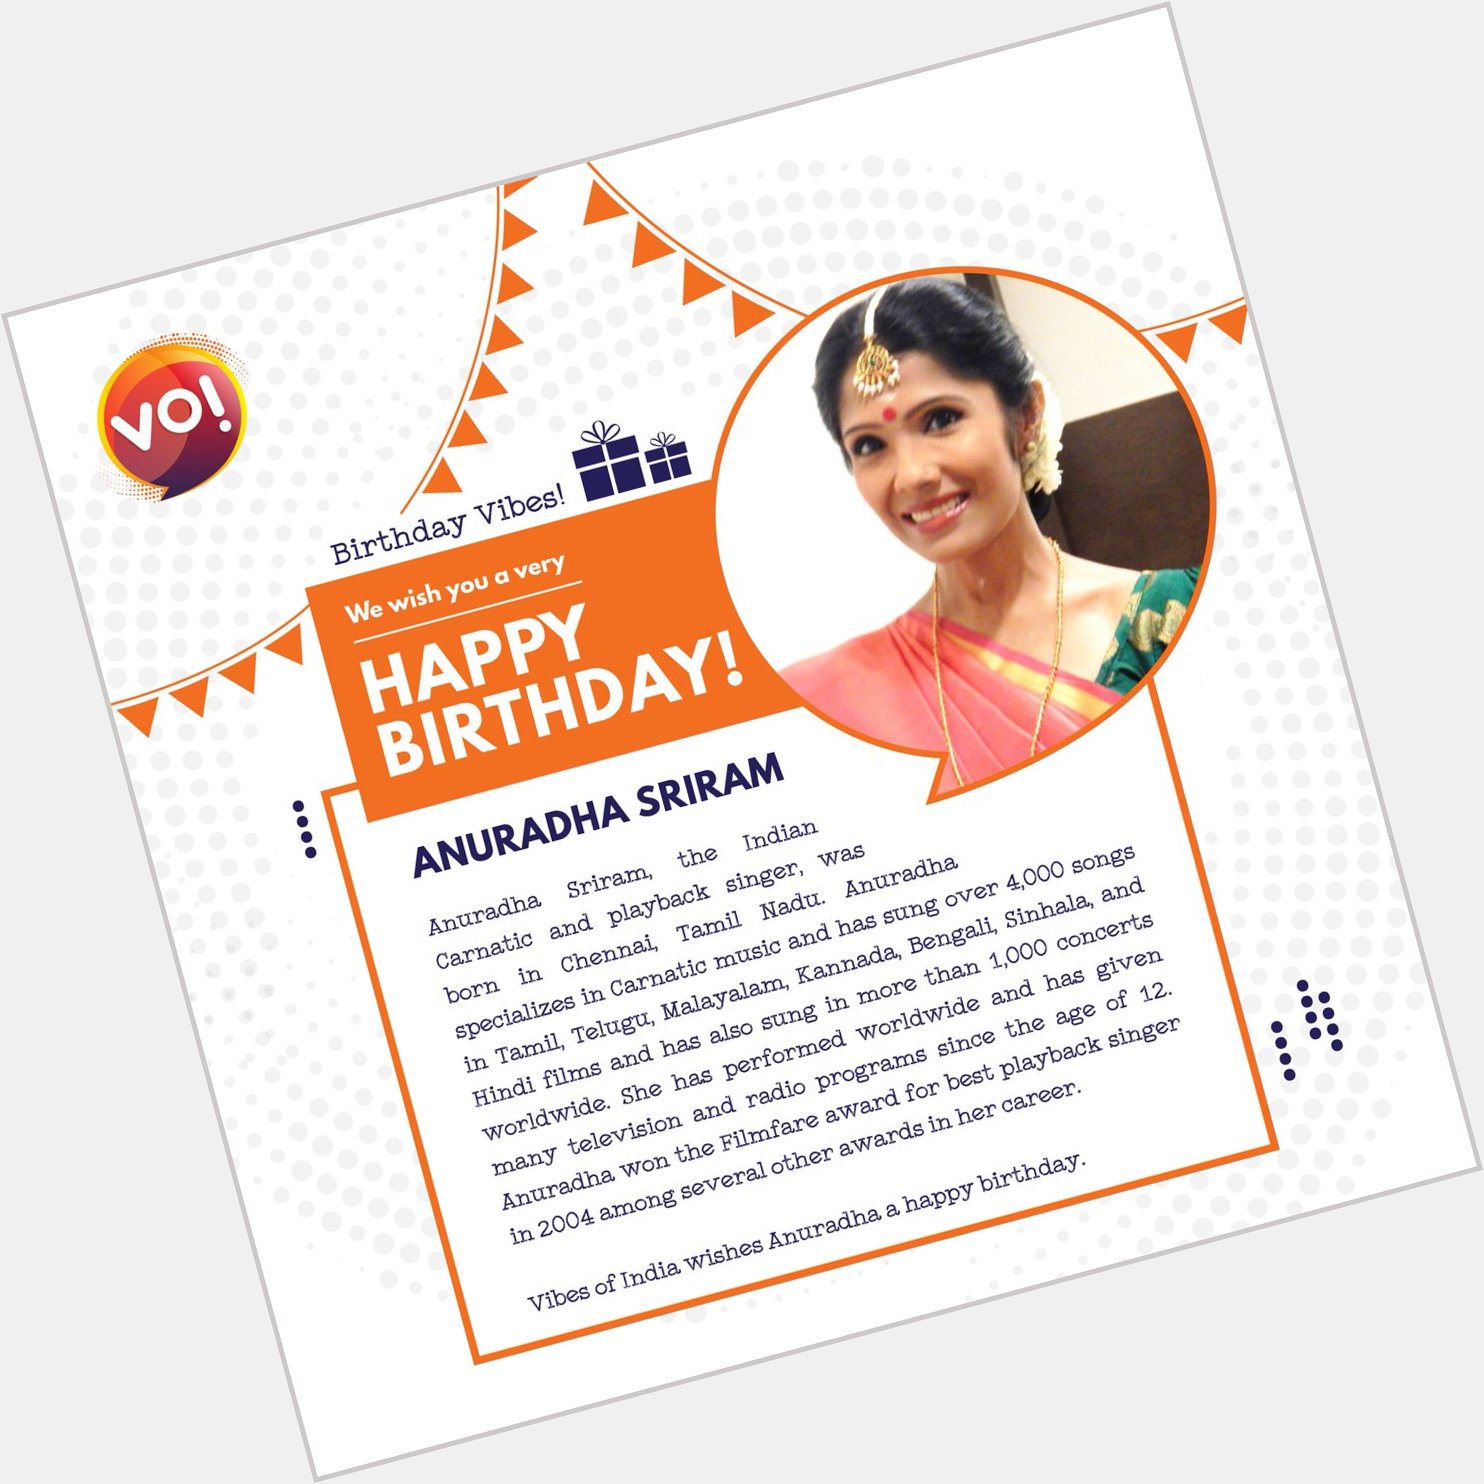 Happy Birthday, Anuradha Sriram 